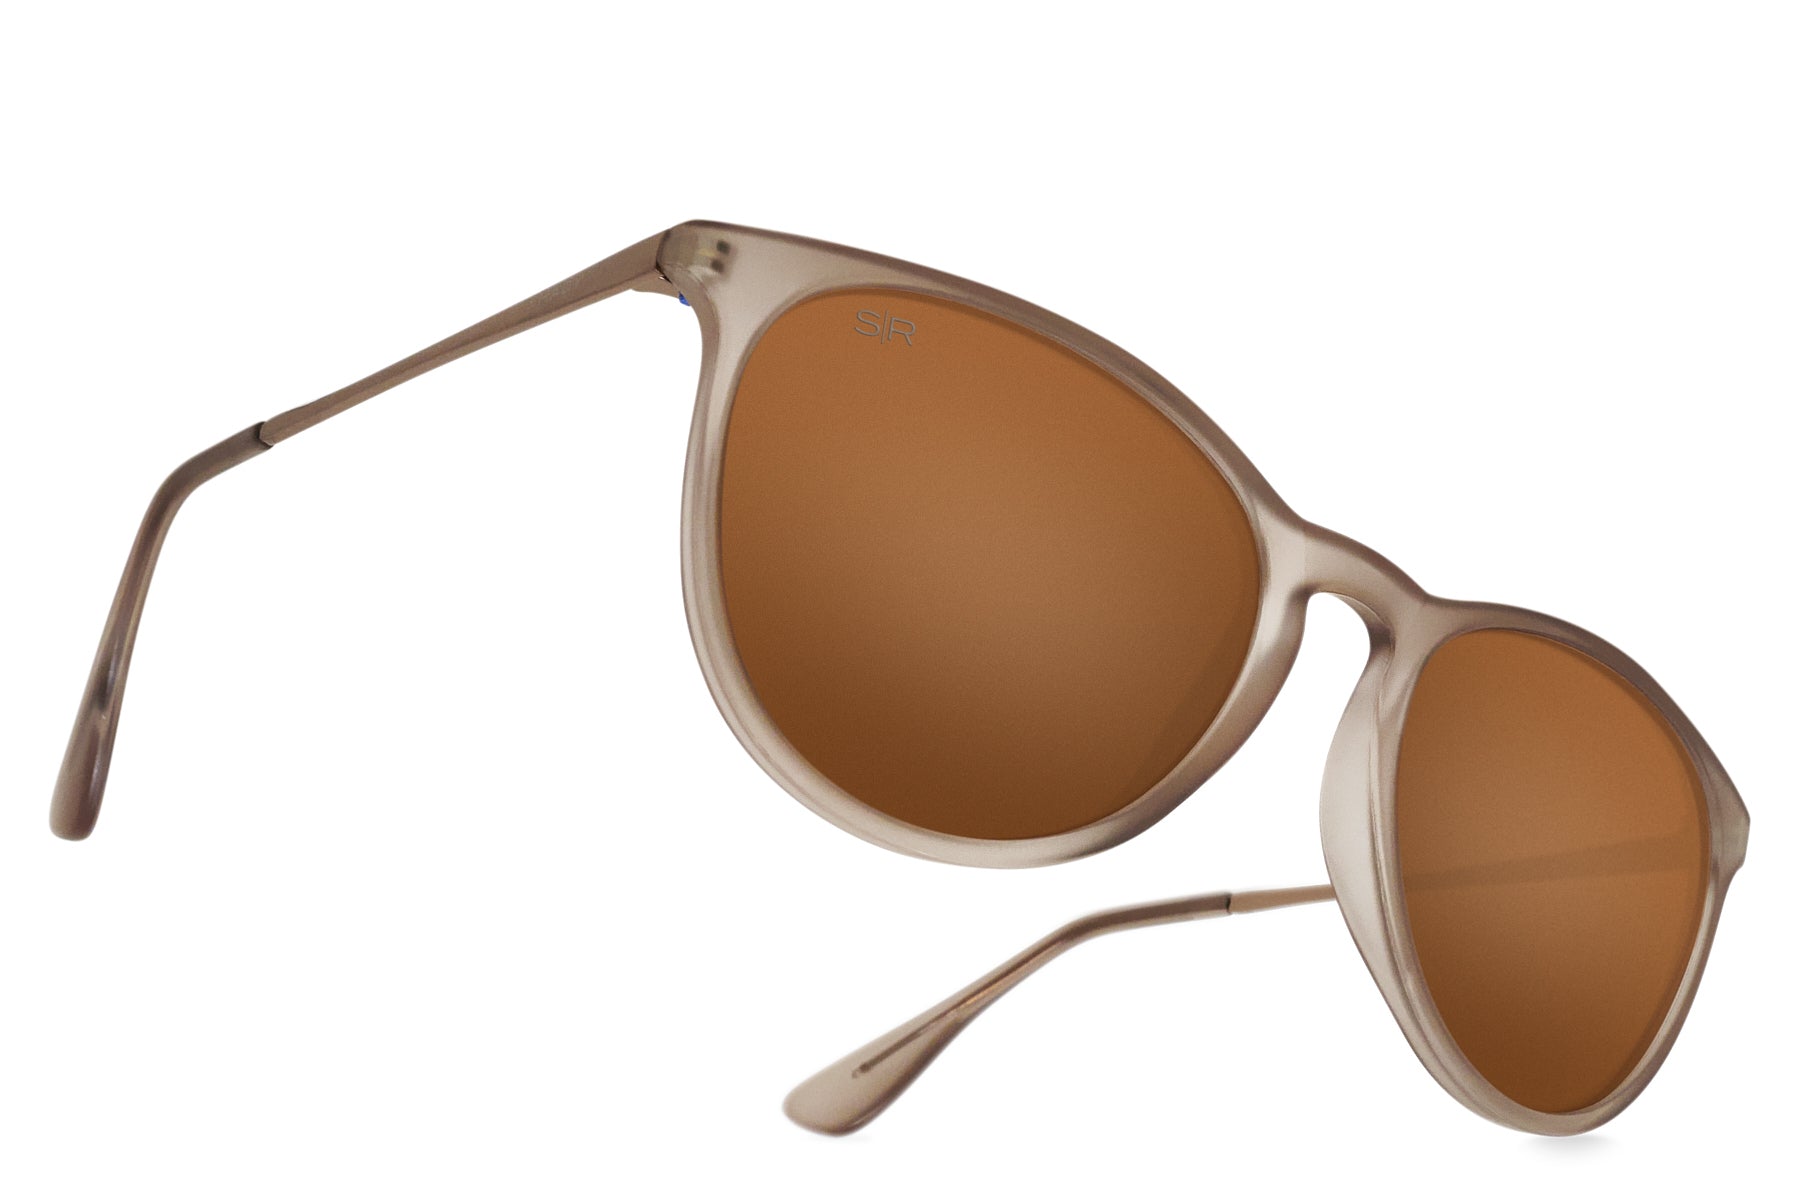 Magnolia Sunglasses, Small Round Wood Sunglasses